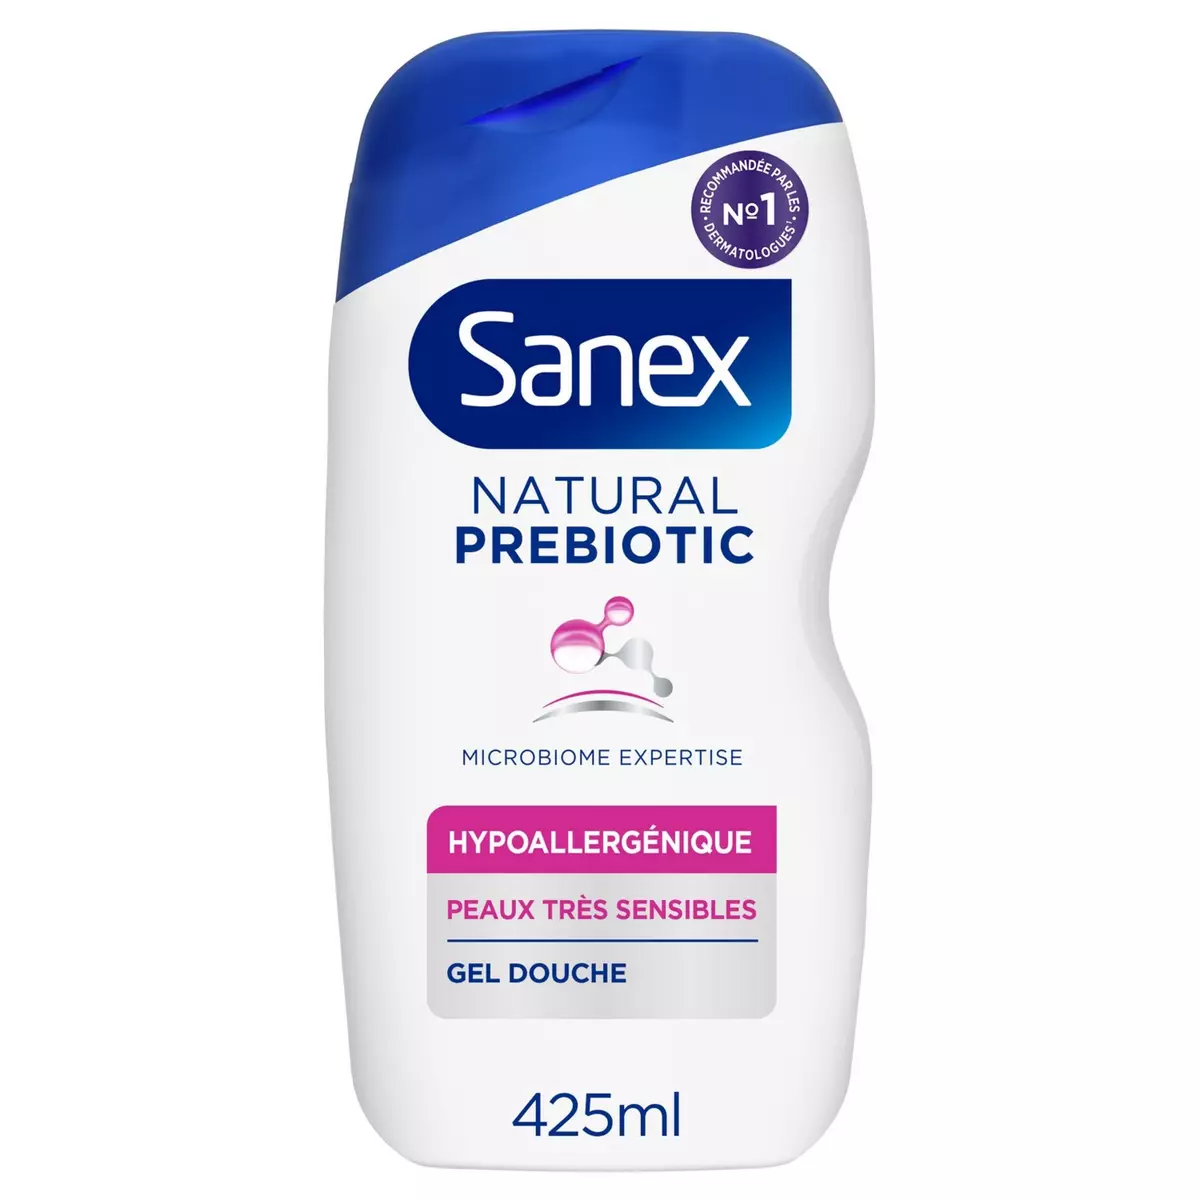 SANEX Natural prebiotic gel douche 425ml